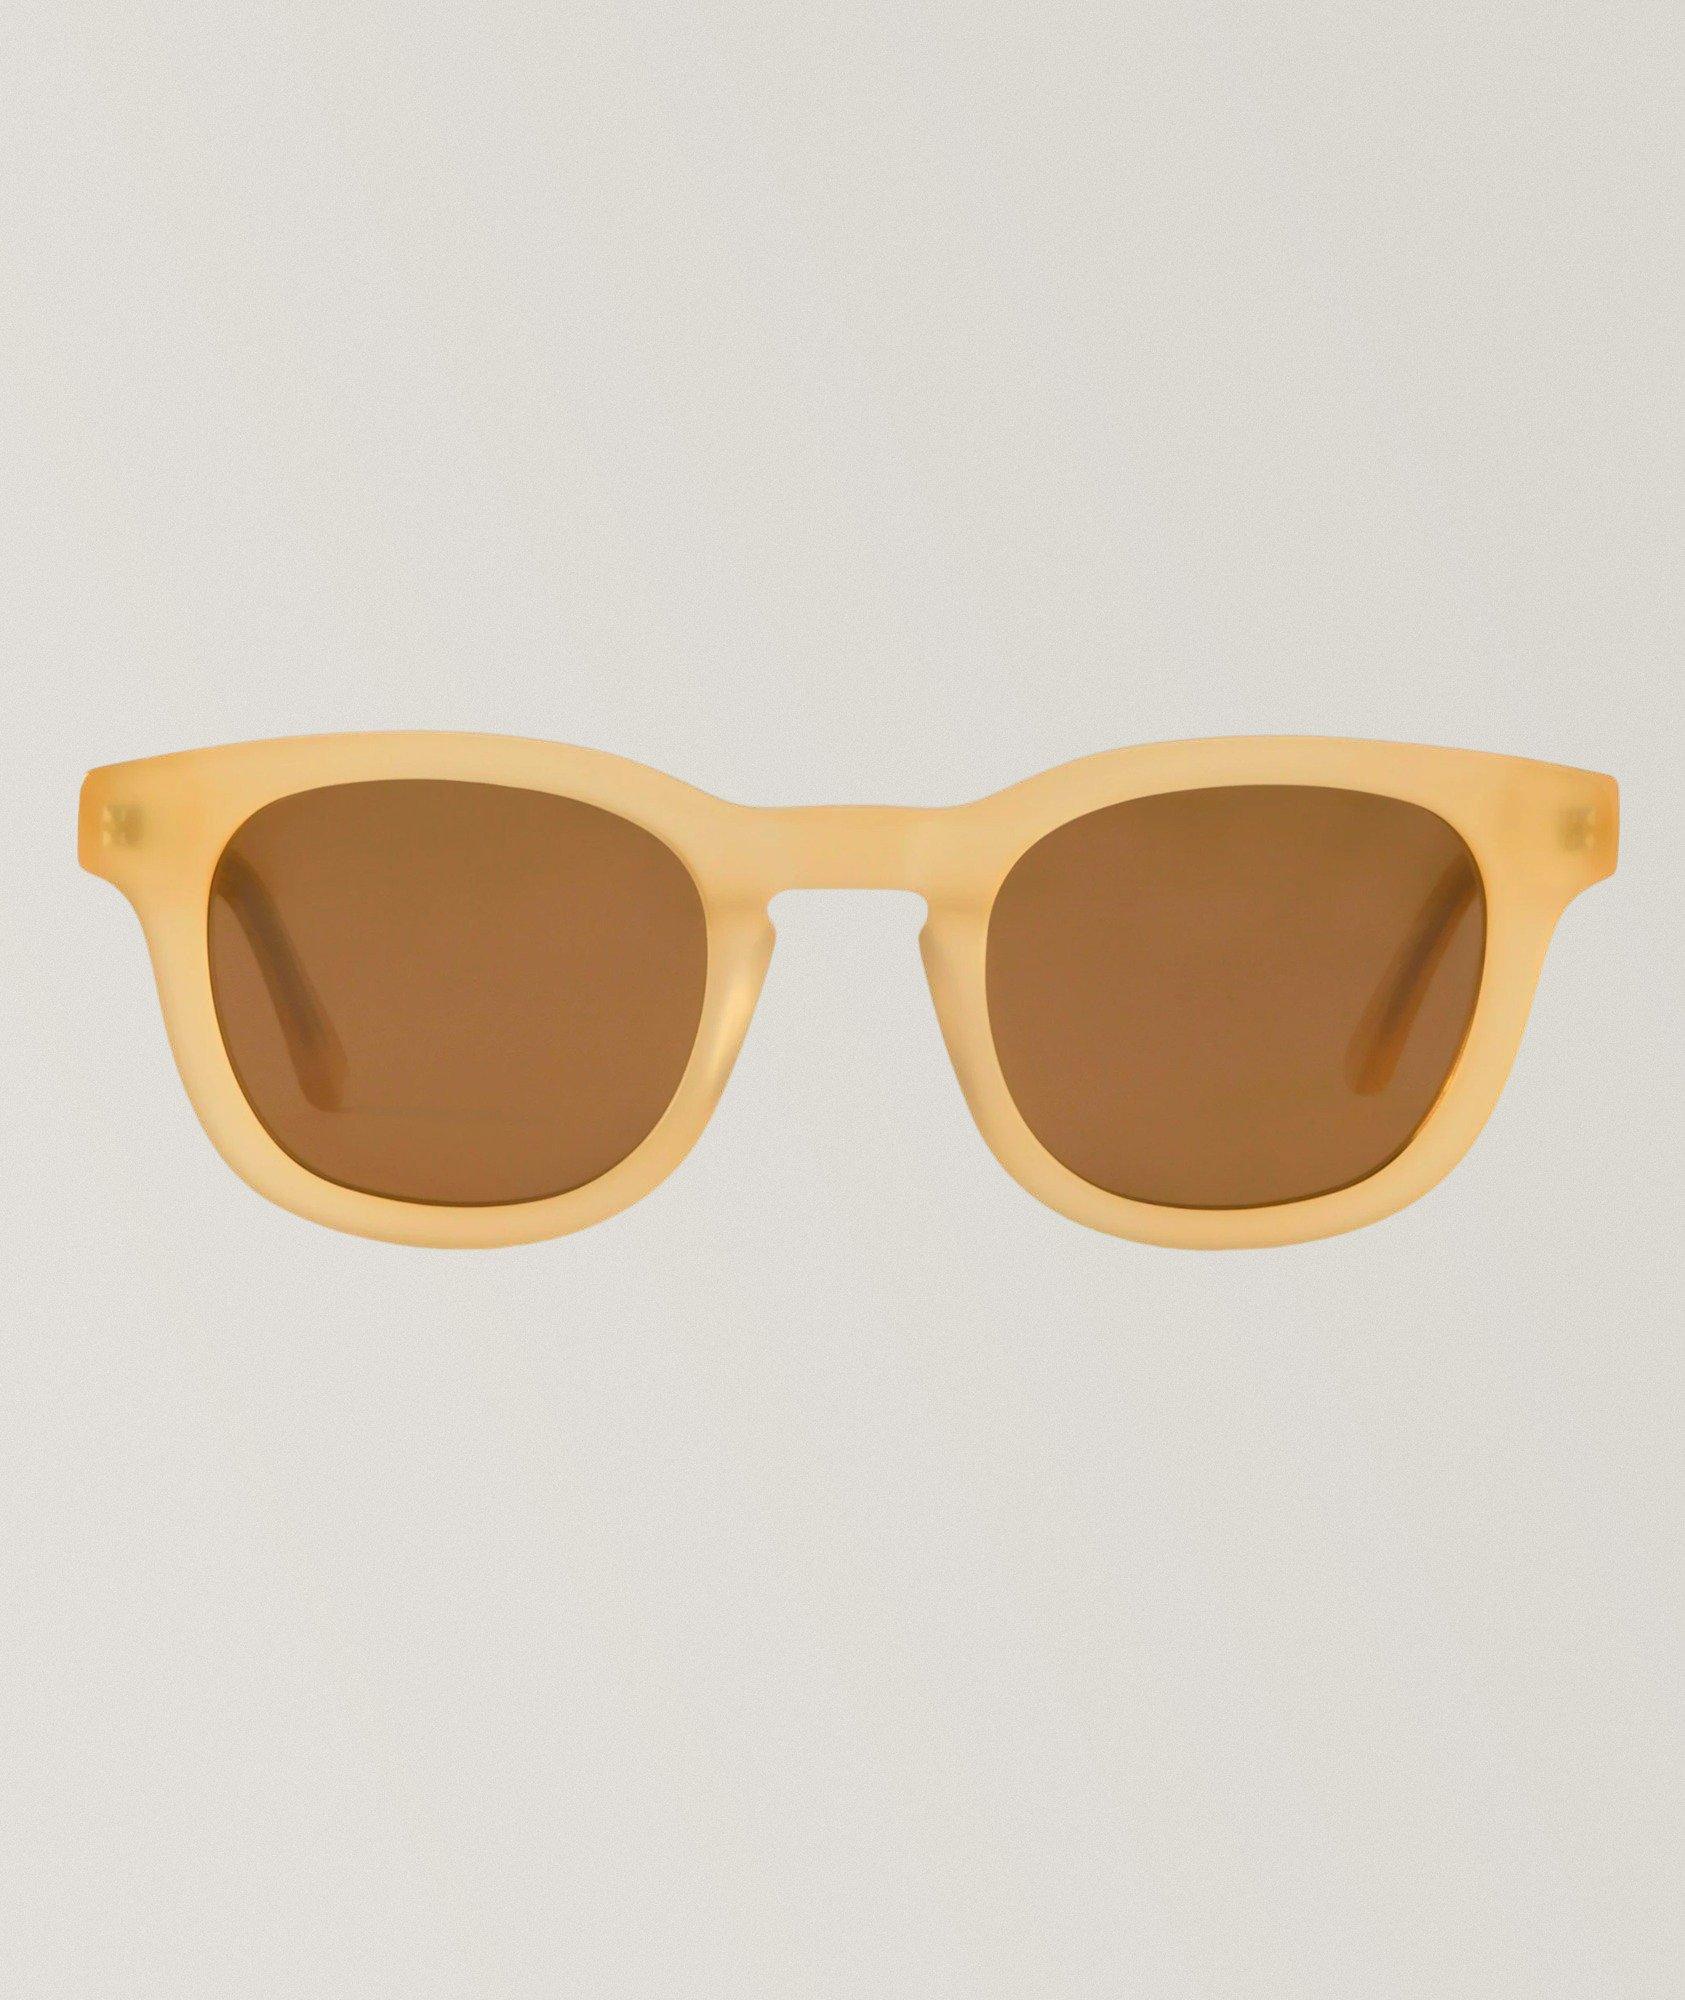 Claude Wayfarer Sunglasses image 1